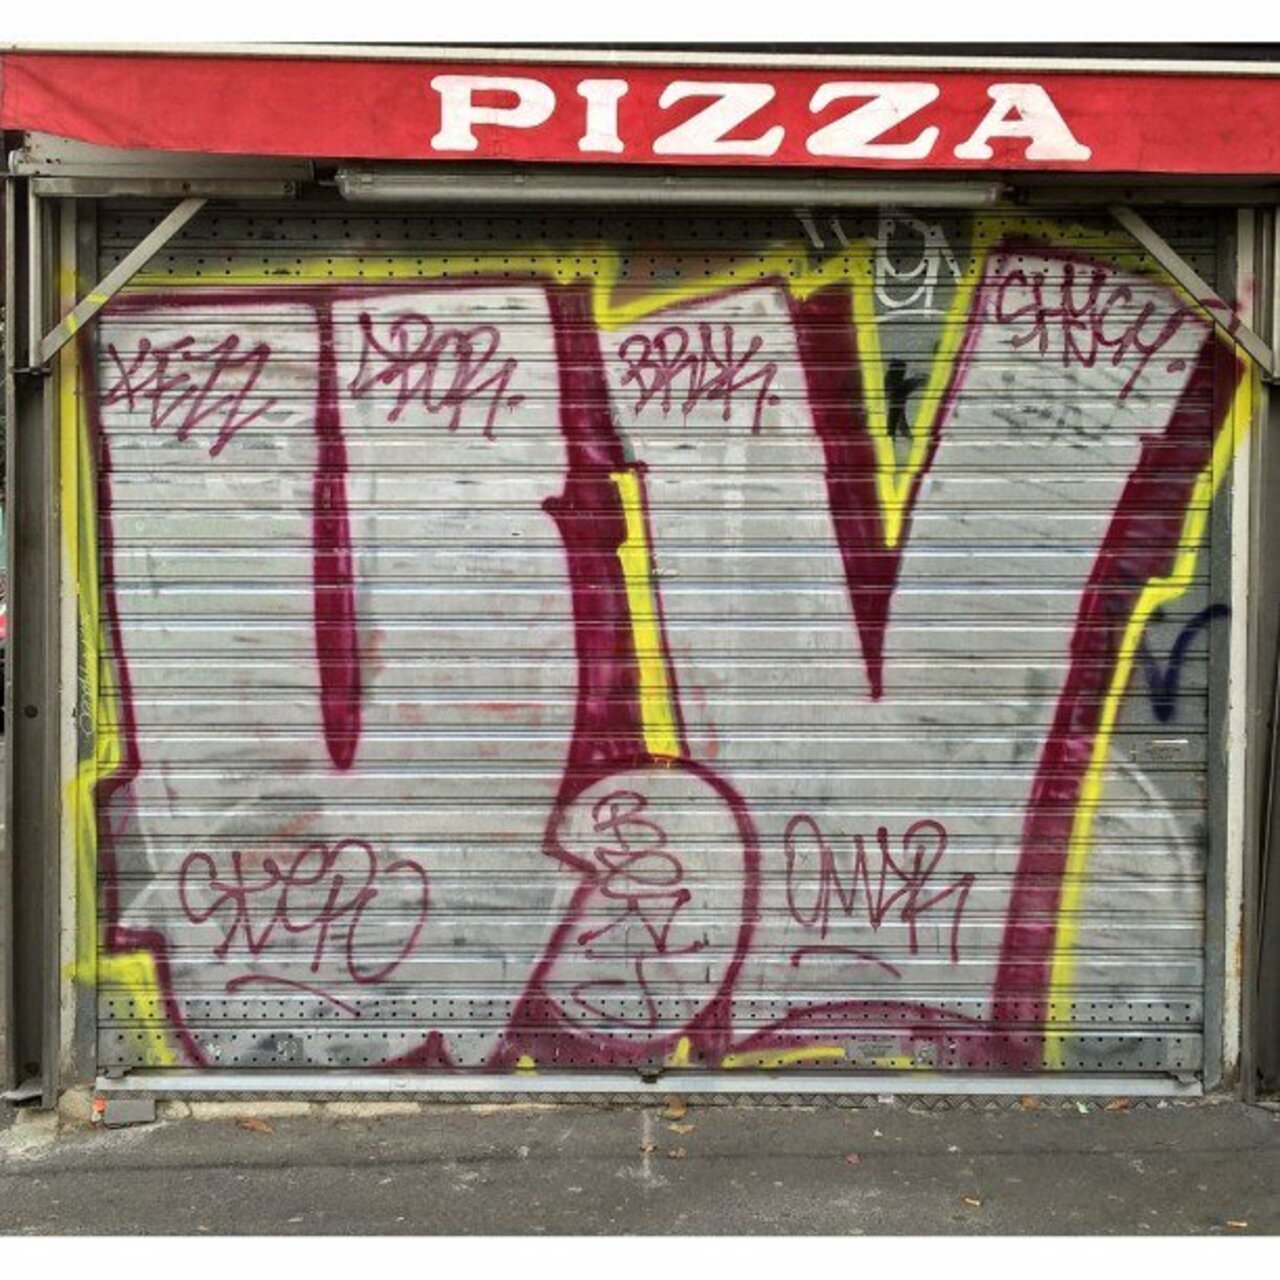 UV
#UVcrew #streetart #graffiti #graff #art #fatcap #bombing #sprayart #spraycanart #wallart #handstyle #lettering … https://t.co/f7gGOLE8Jx